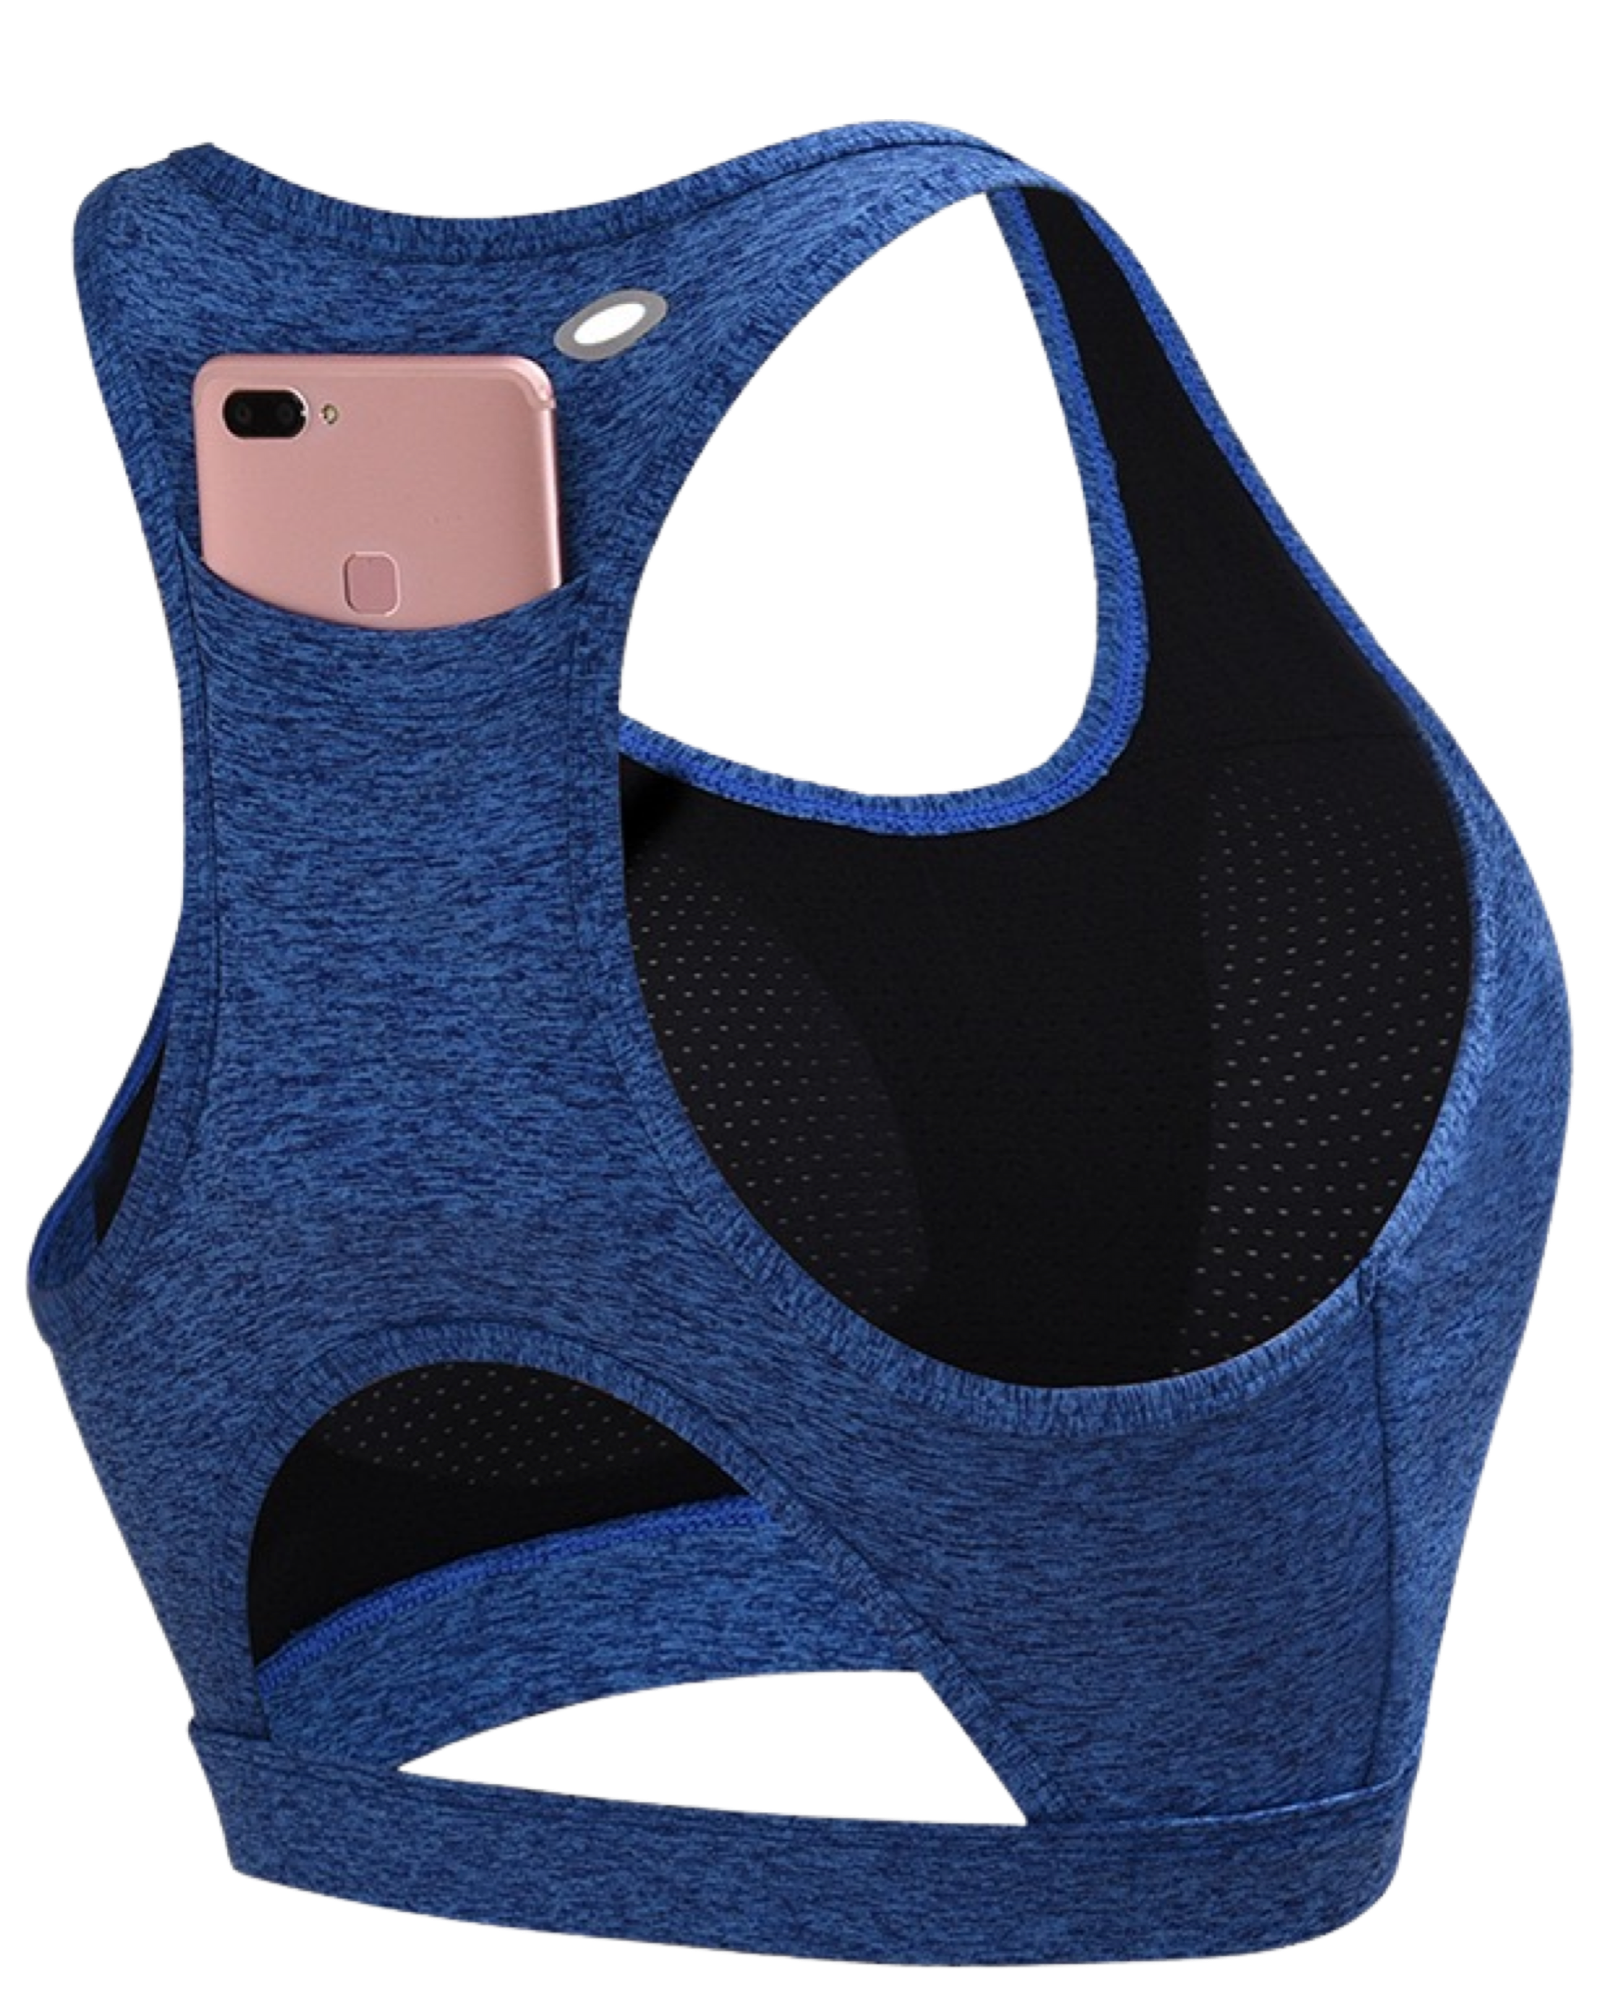 Padded Sports Bra with Phone Pocket